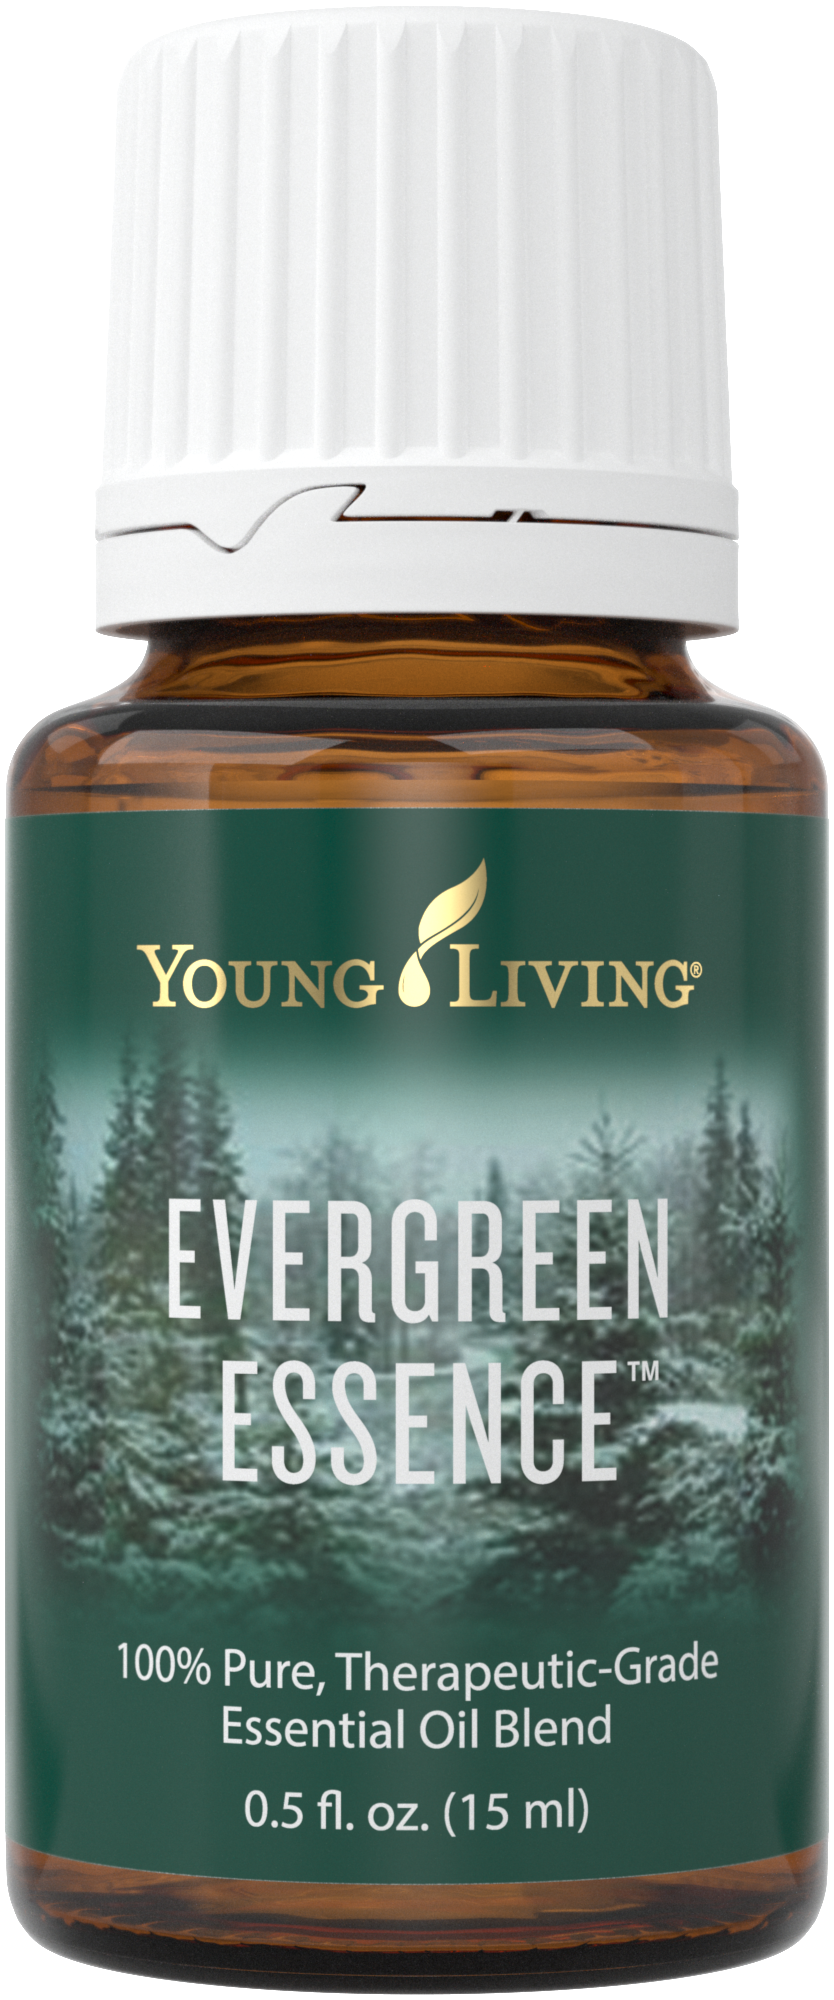 Evergreen Essence15ml Silo.png